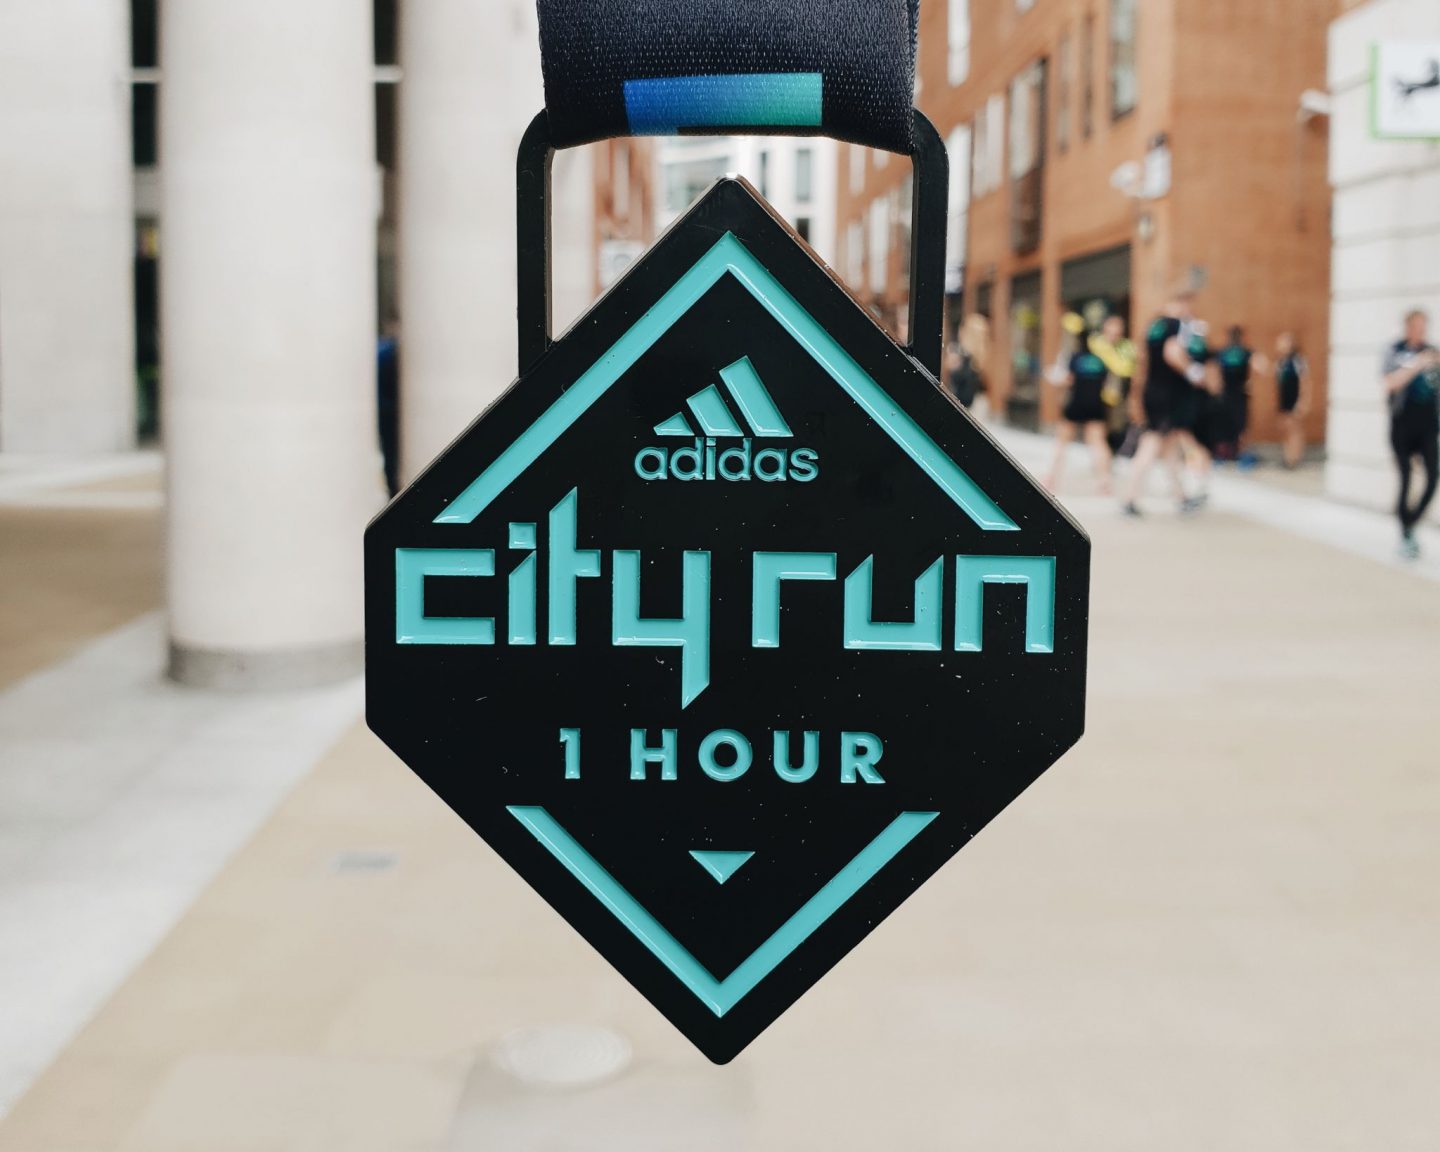 adidas city run 1 hour